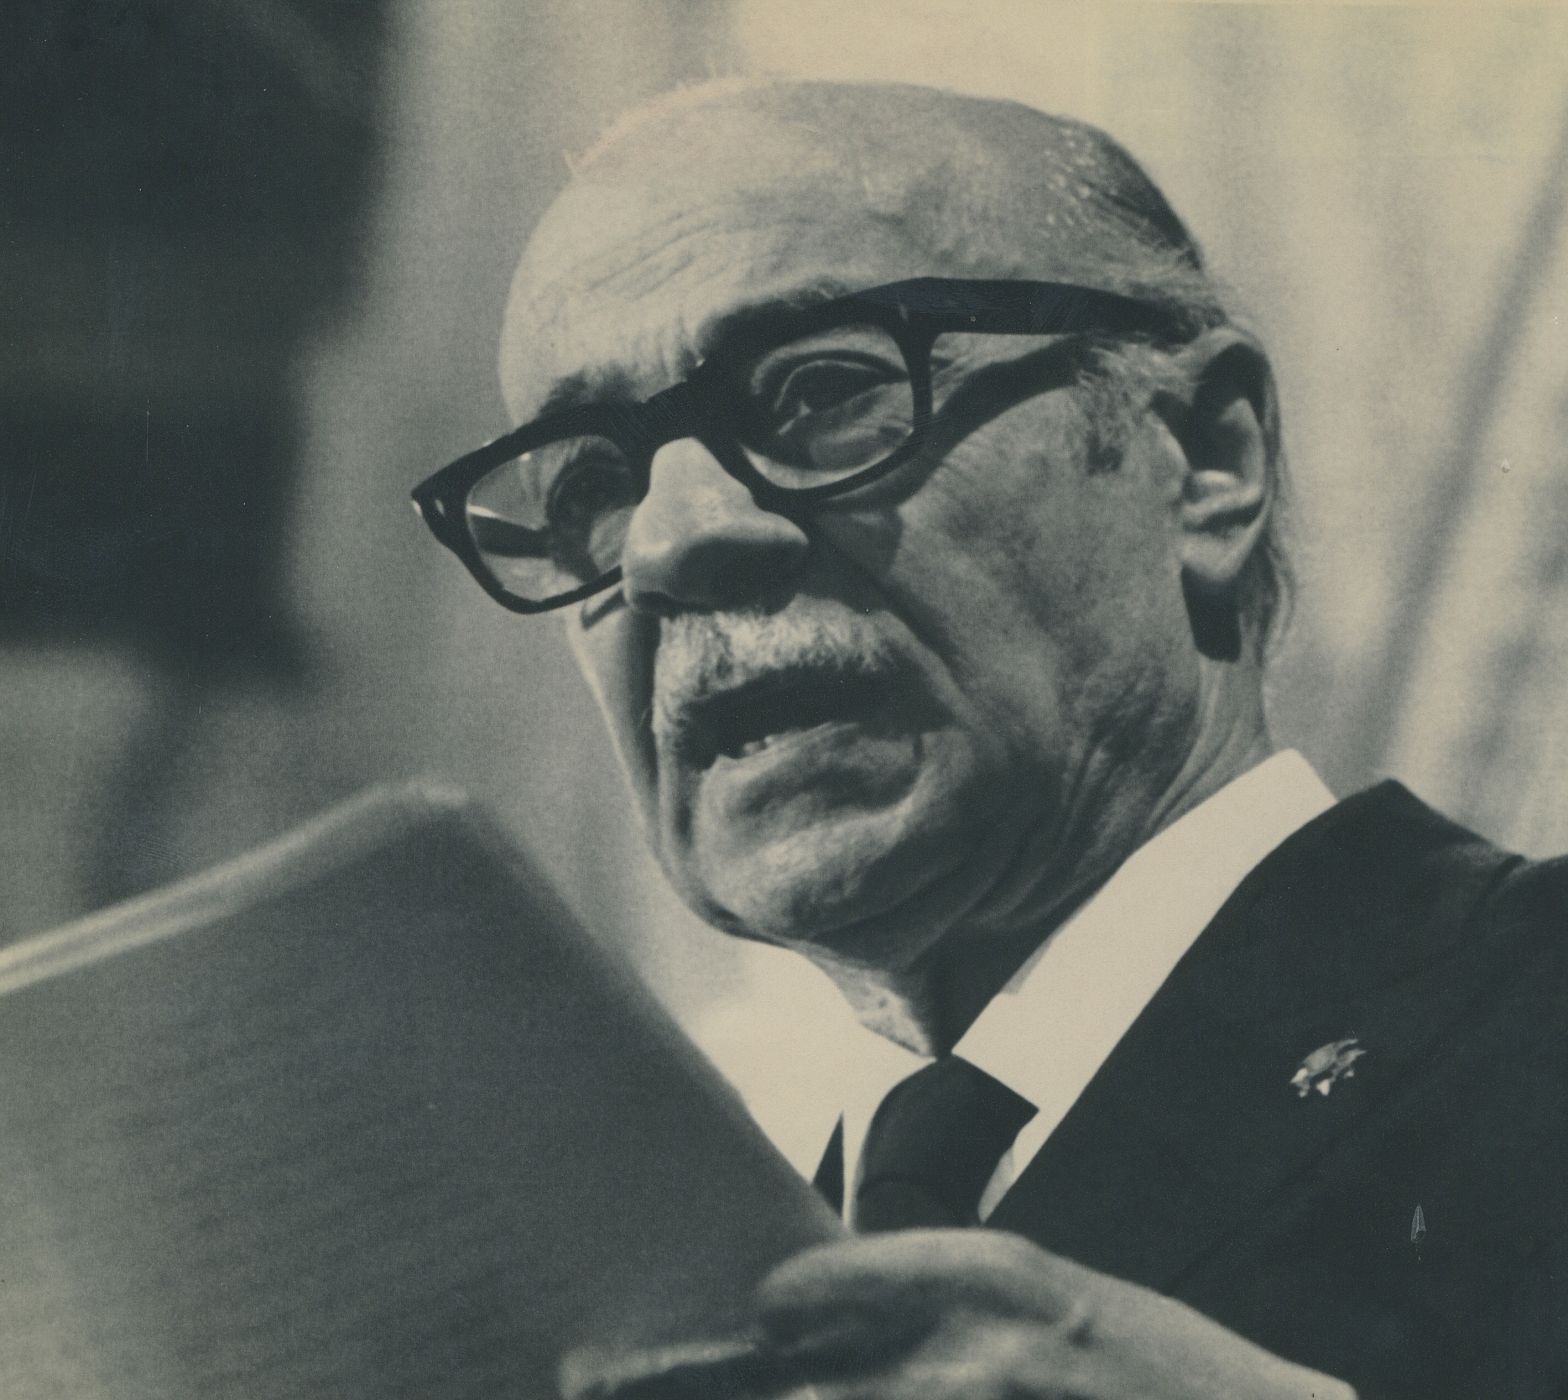 Ernesto Sábato, Premio Cervantes 1984